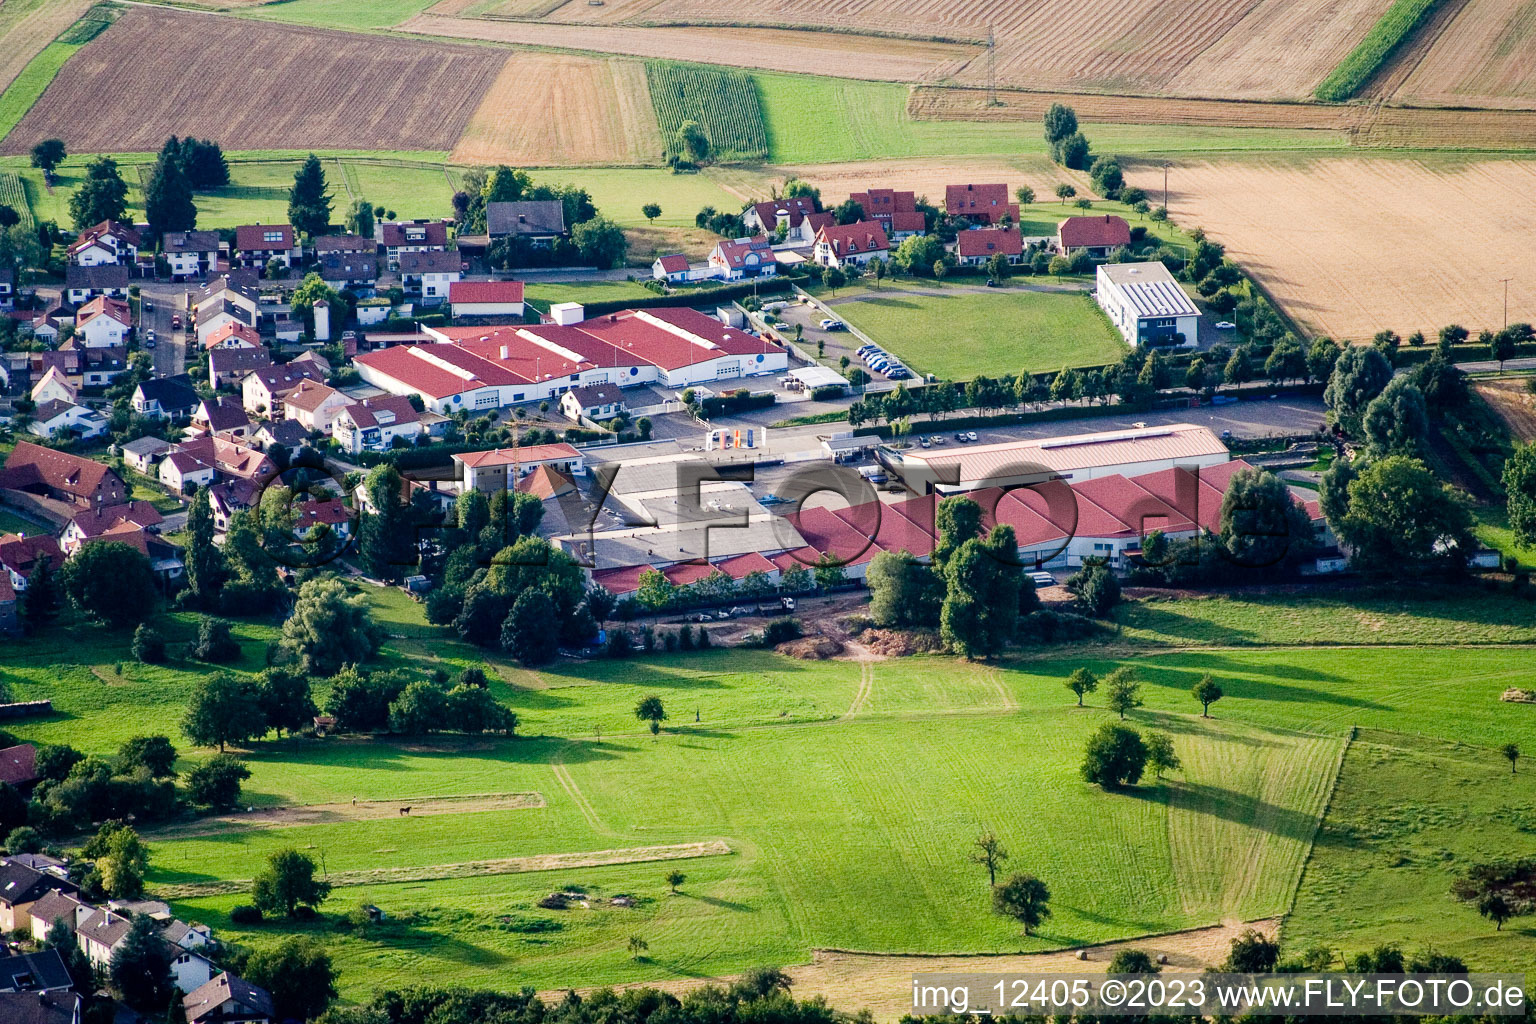 Aerial view of Vogelsitz GmbH, Kleinsteinbacherstrasse 44 in the district Stupferich in Karlsruhe in the state Baden-Wuerttemberg, Germany